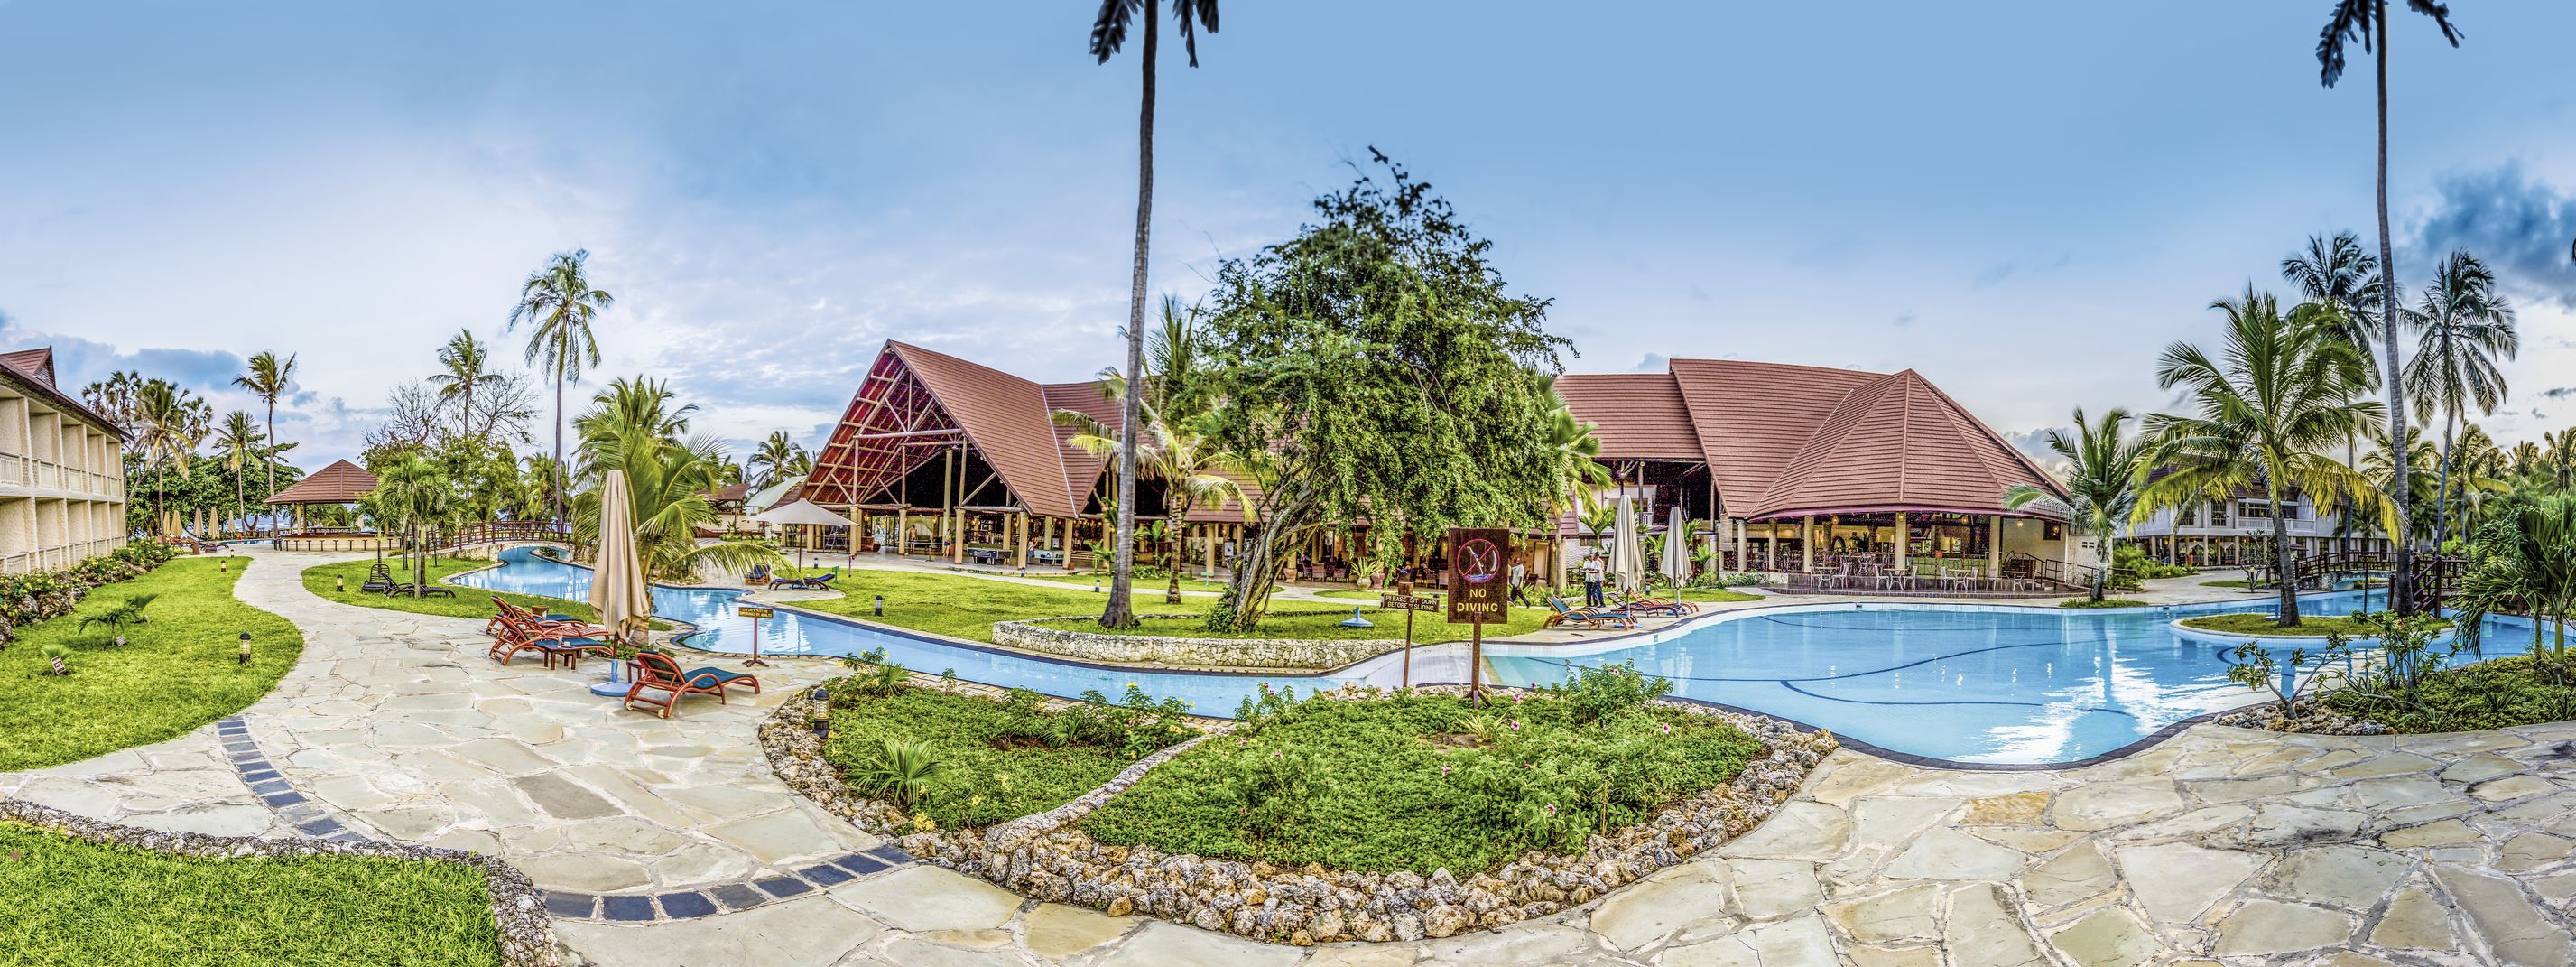 Hôtel Amani Tiwi Beach Resort 4* pas cher photo 2